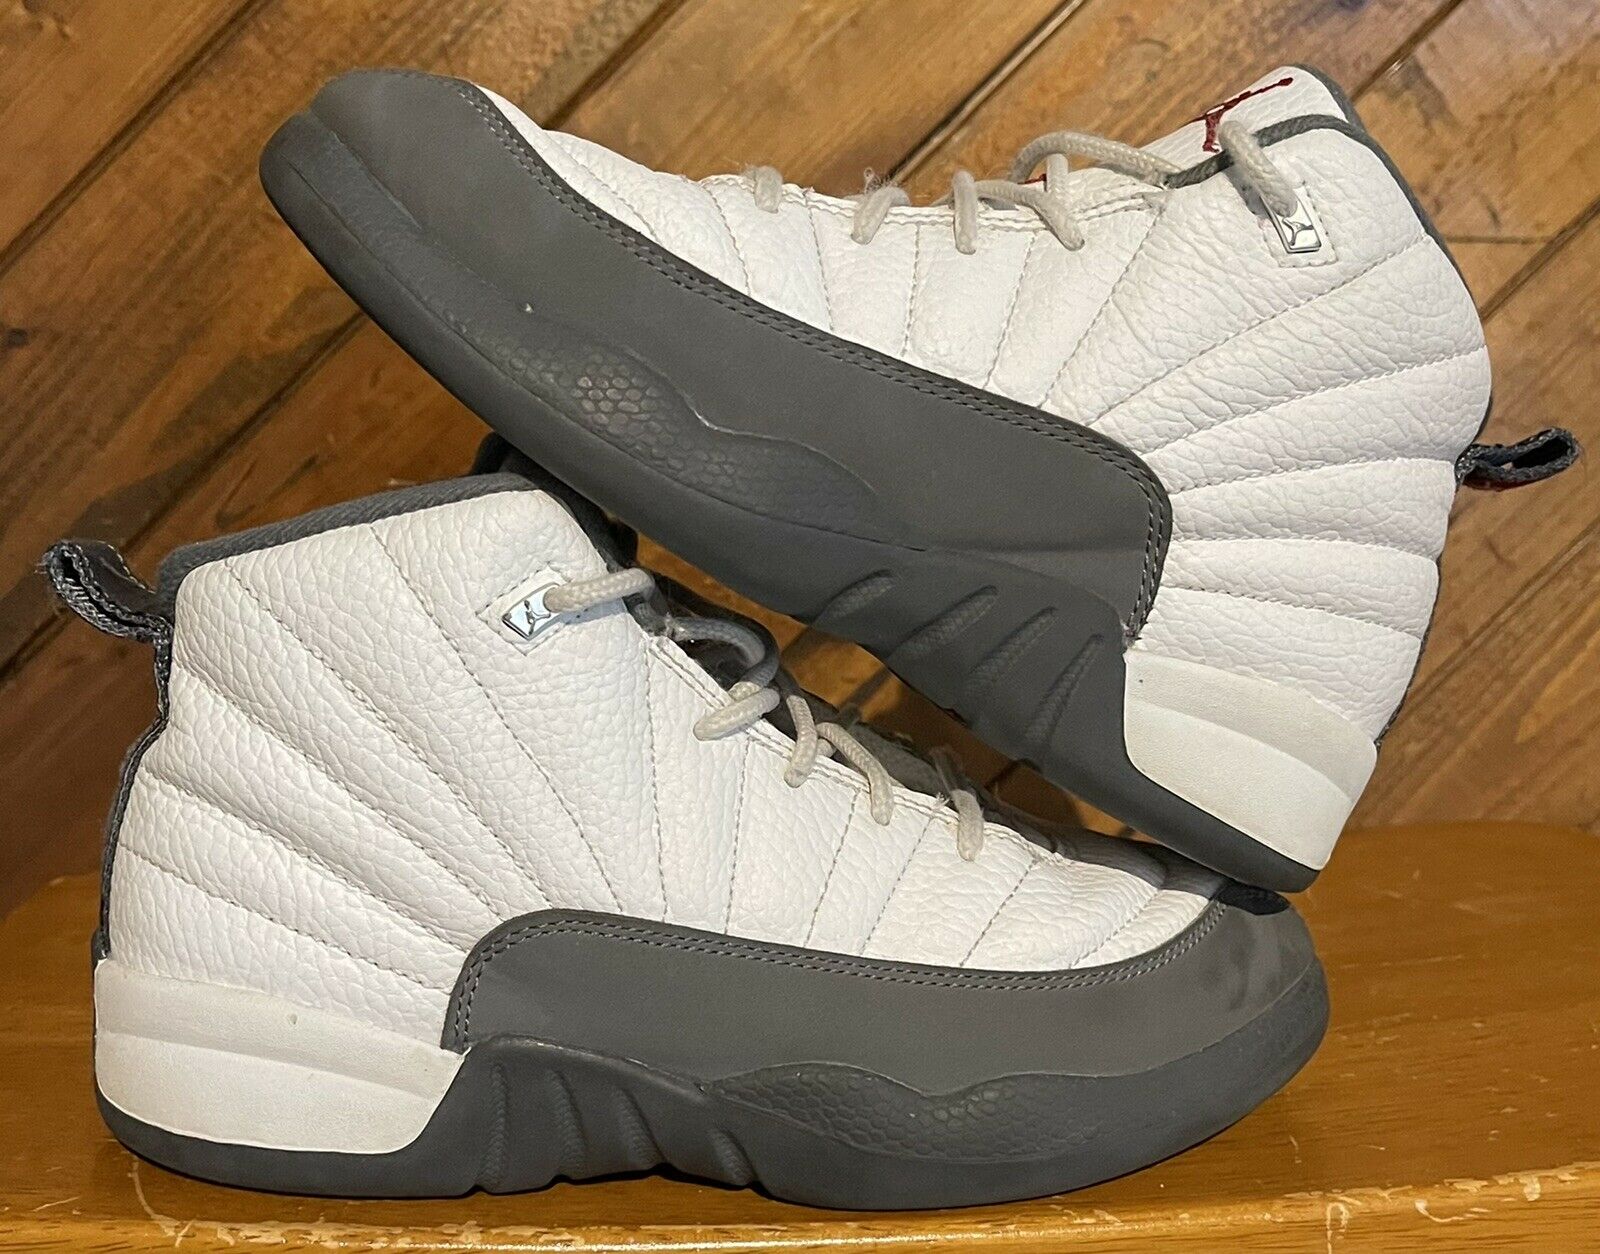 Nike Air Jordan 12 XII Retro White Dark Grey Shoes 151186-160 Youth Size 3Y